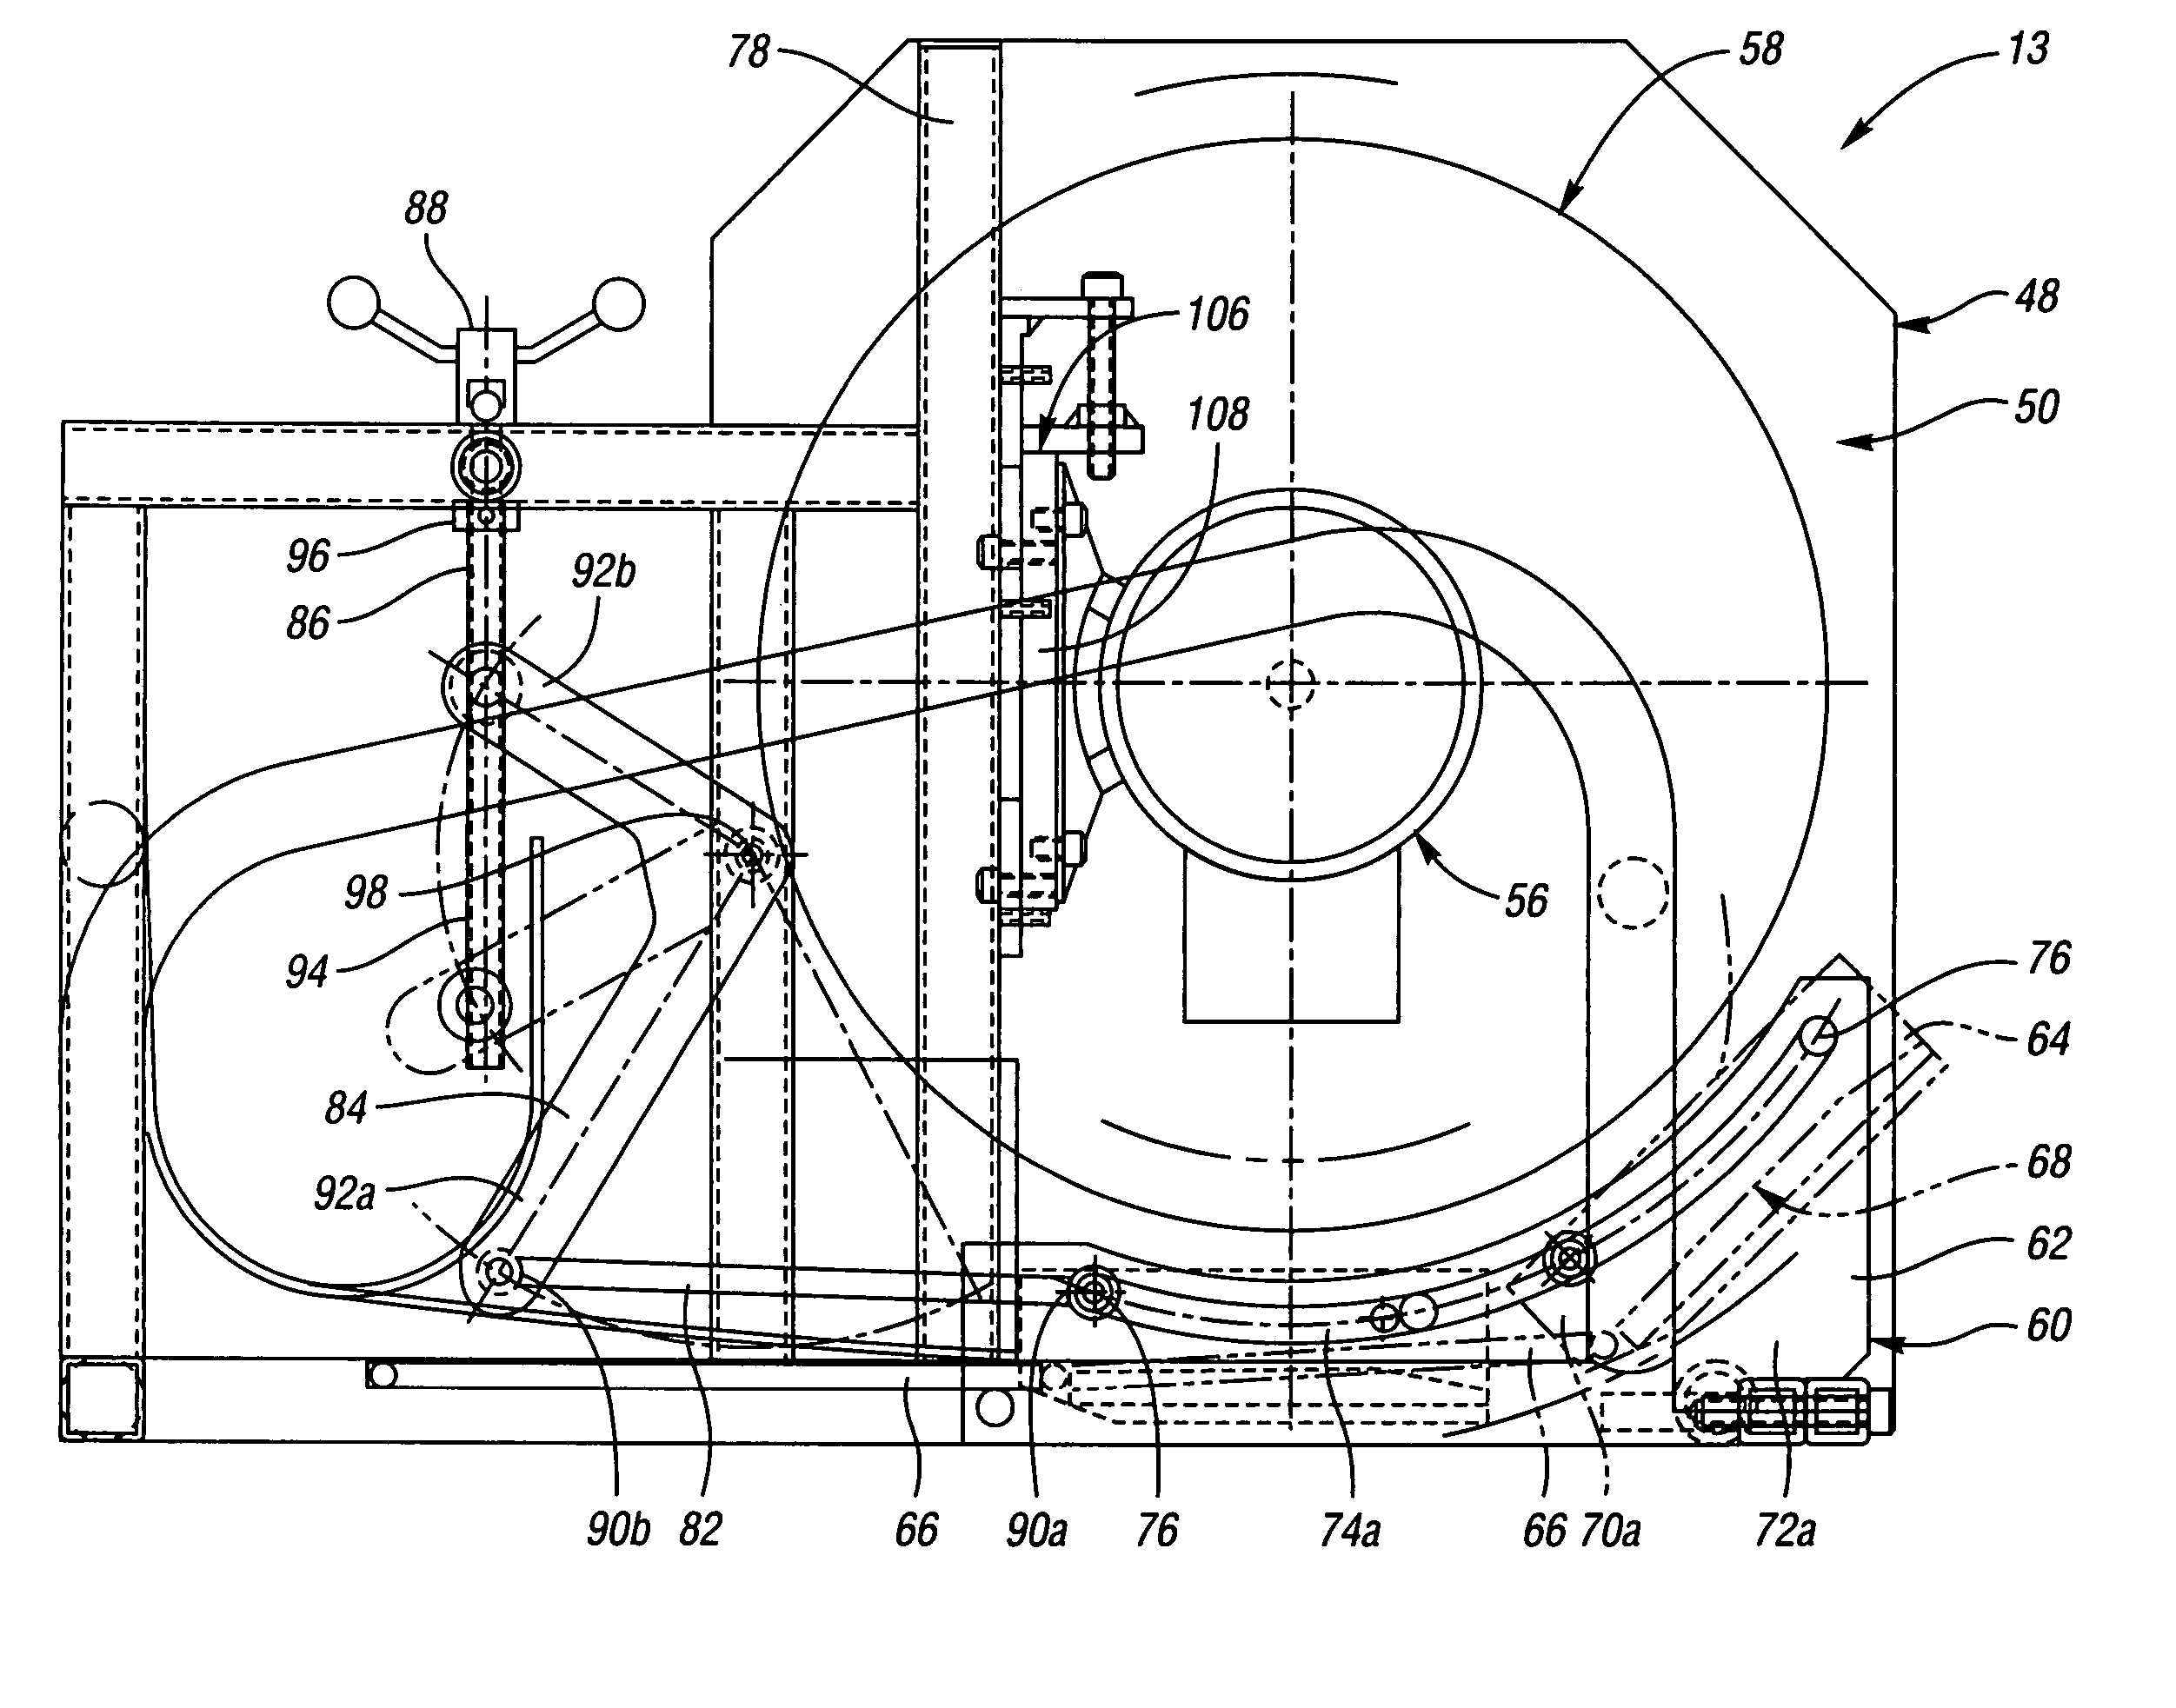 Rotating wheel return mechanism